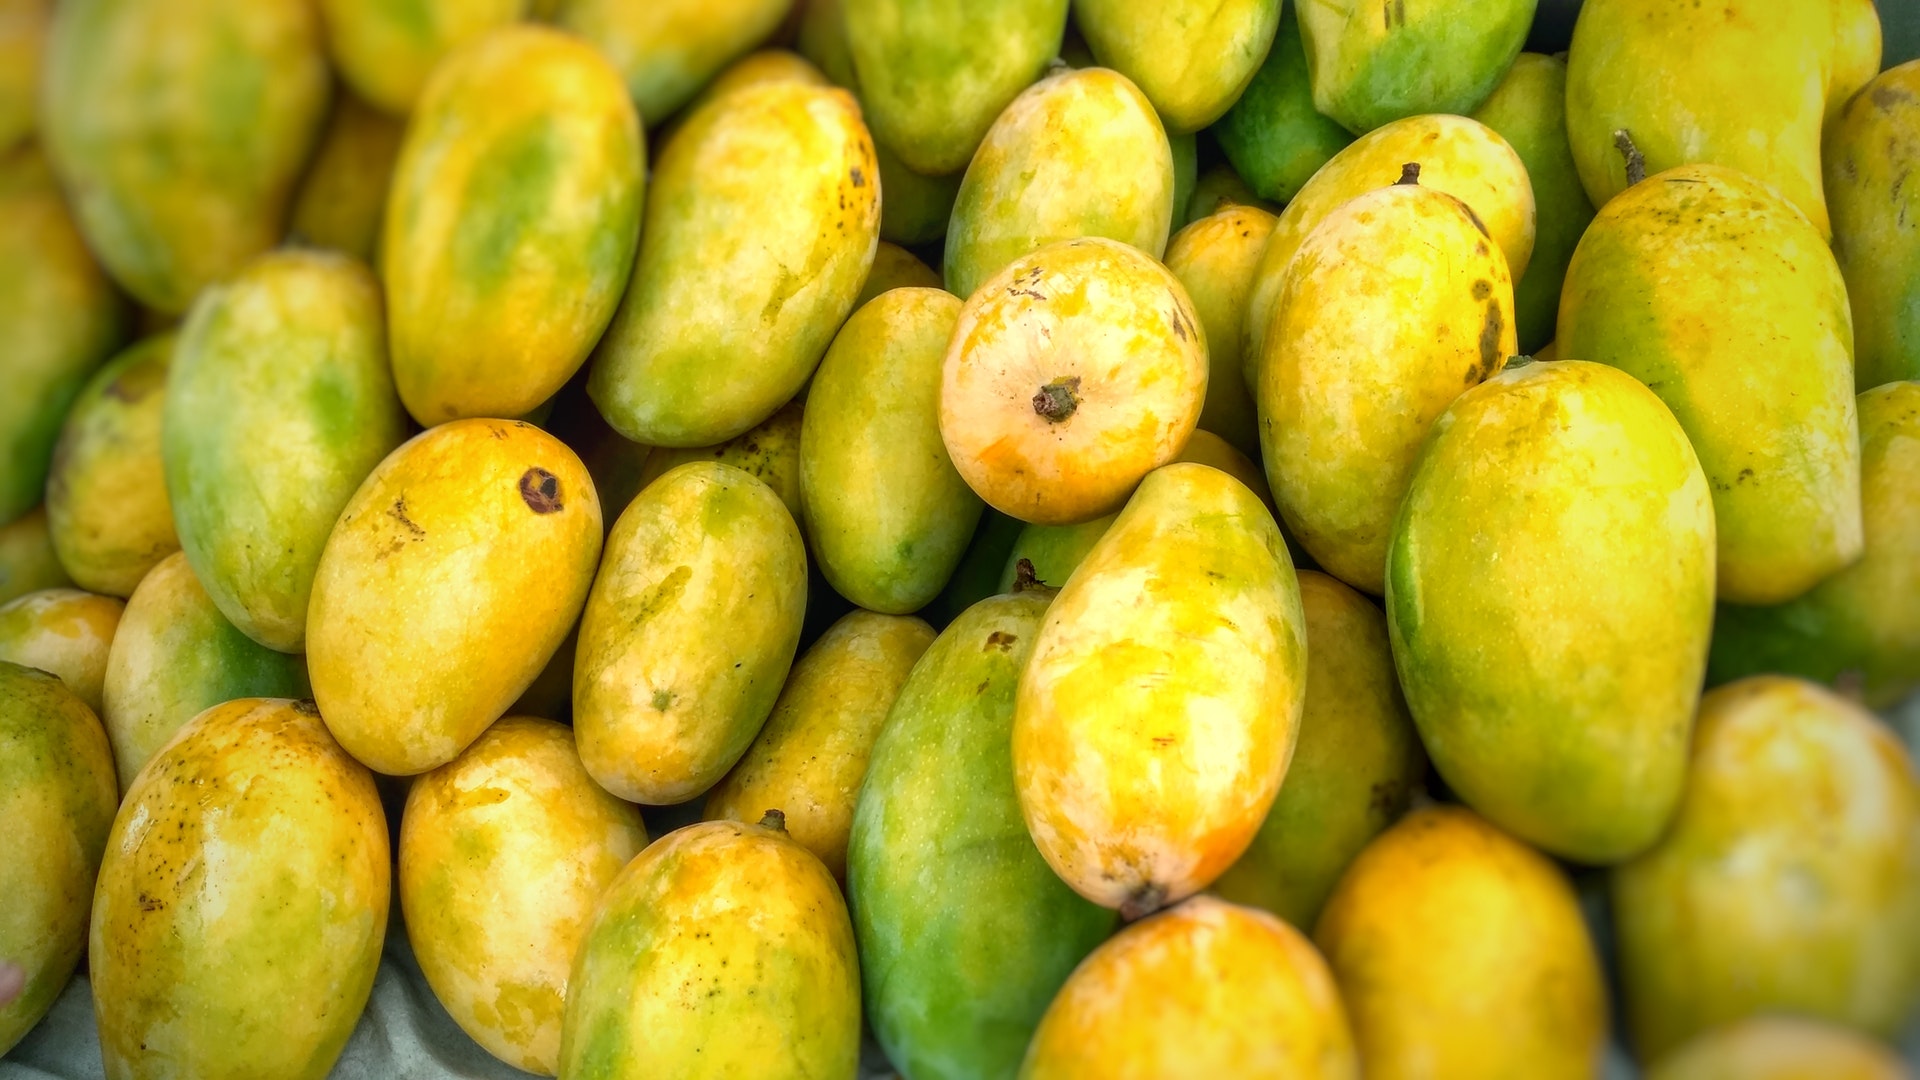 Pakistani Mango Exports to China May Increase This Summer | Produce Report